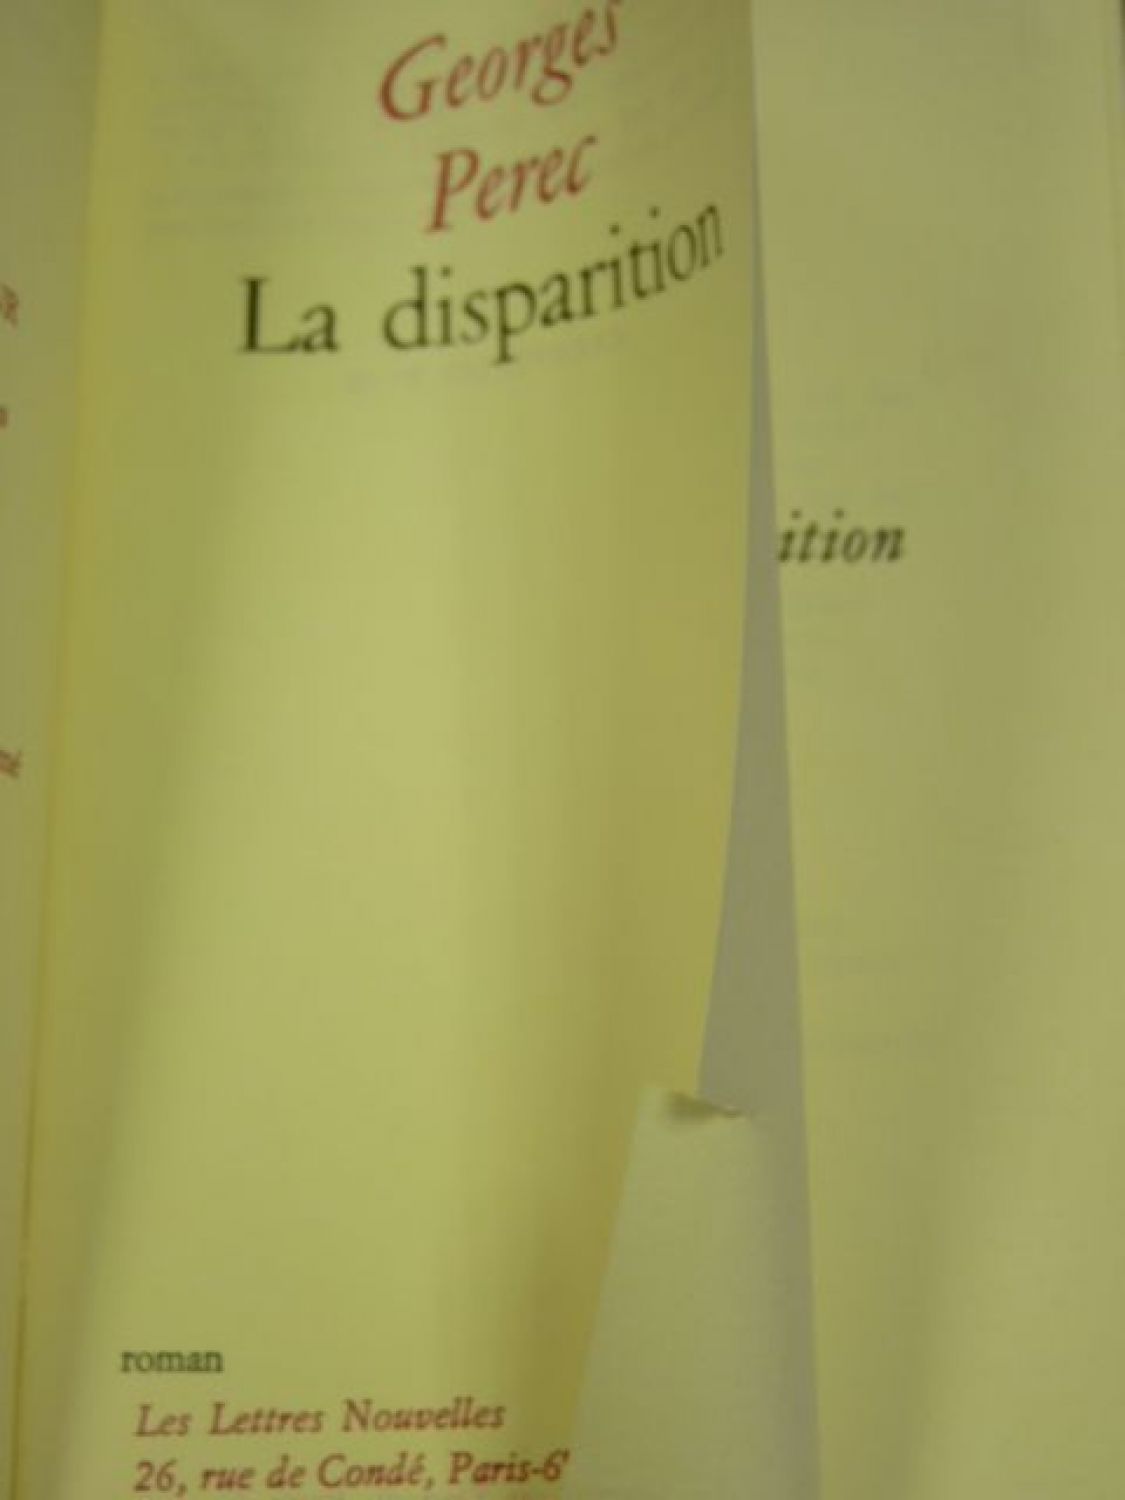 PEREC La disparition - First edition